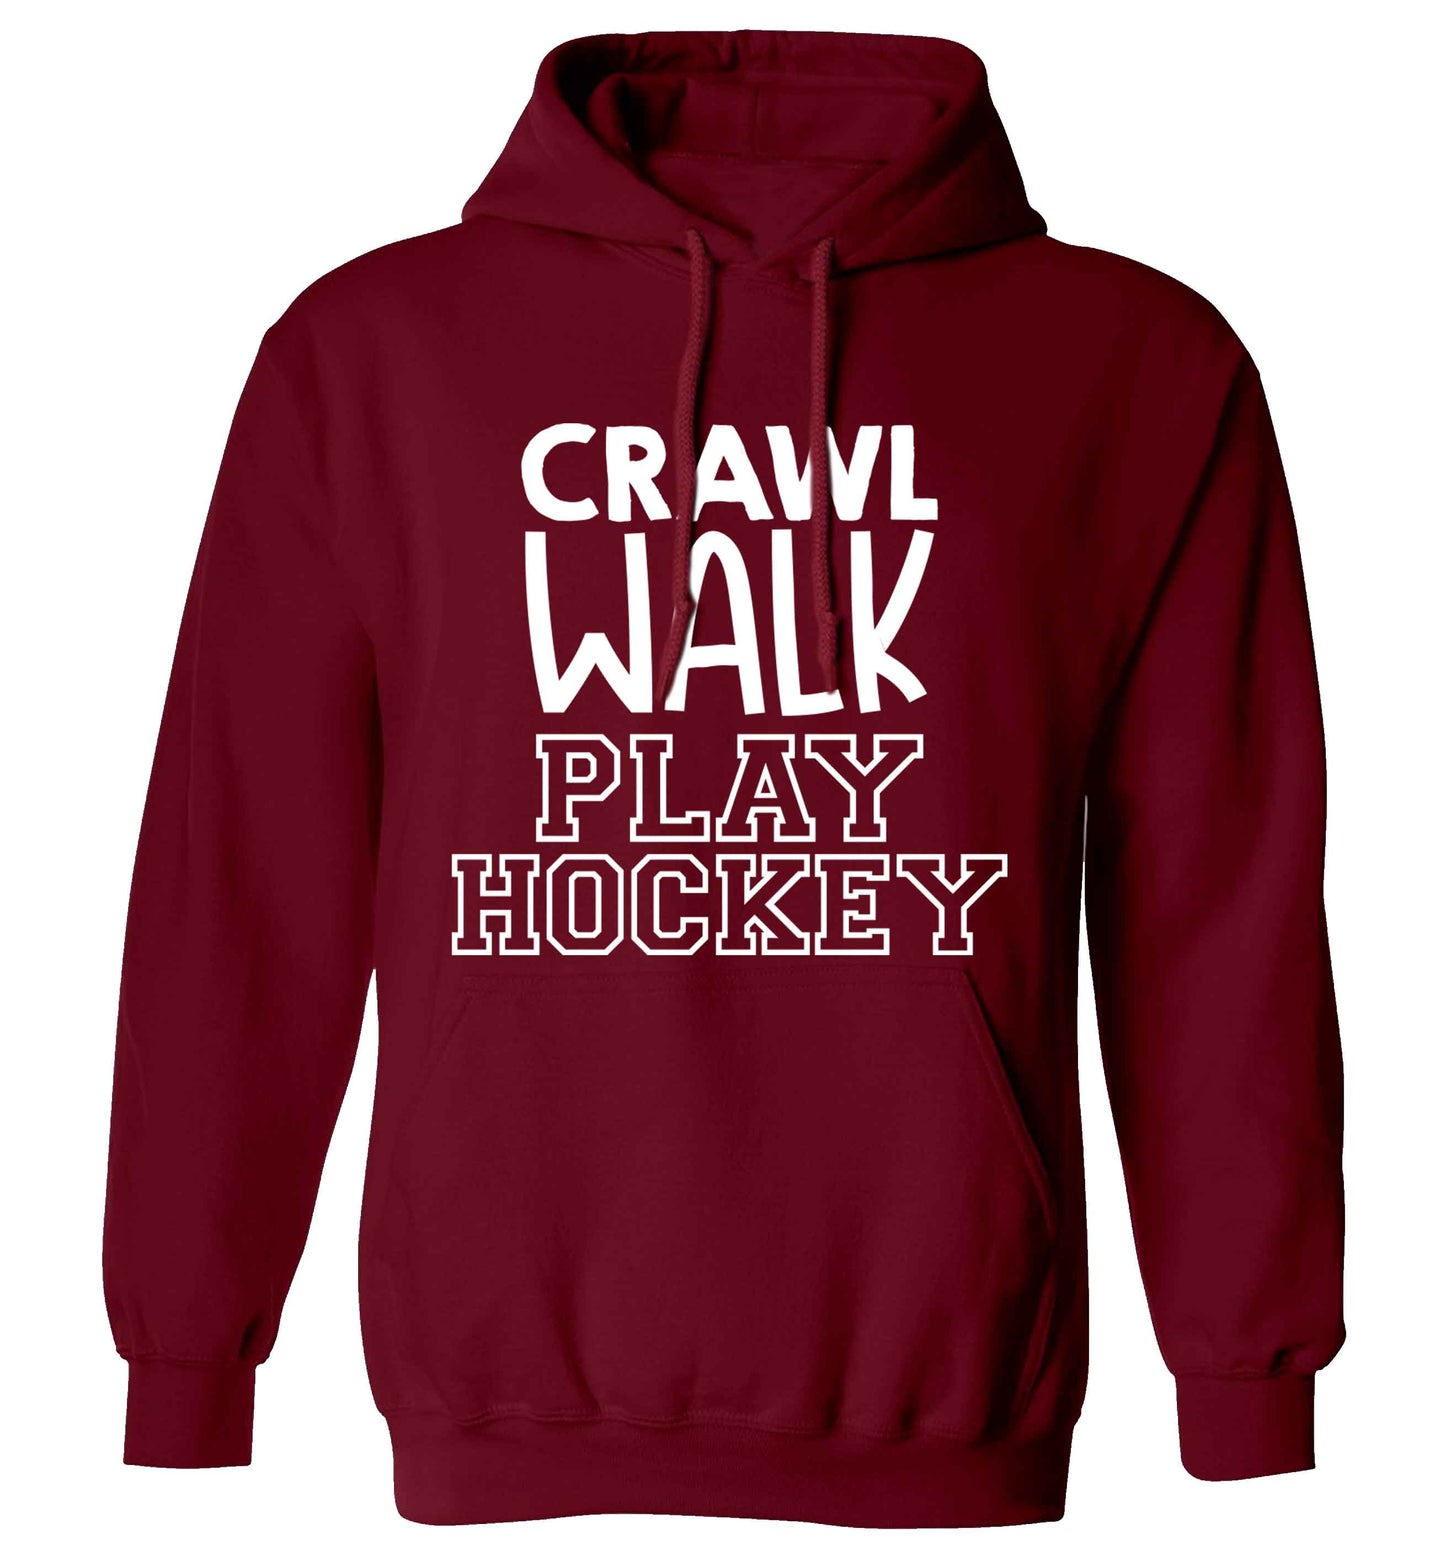 Crawl walk play hockey adults unisex maroon hoodie 2XL